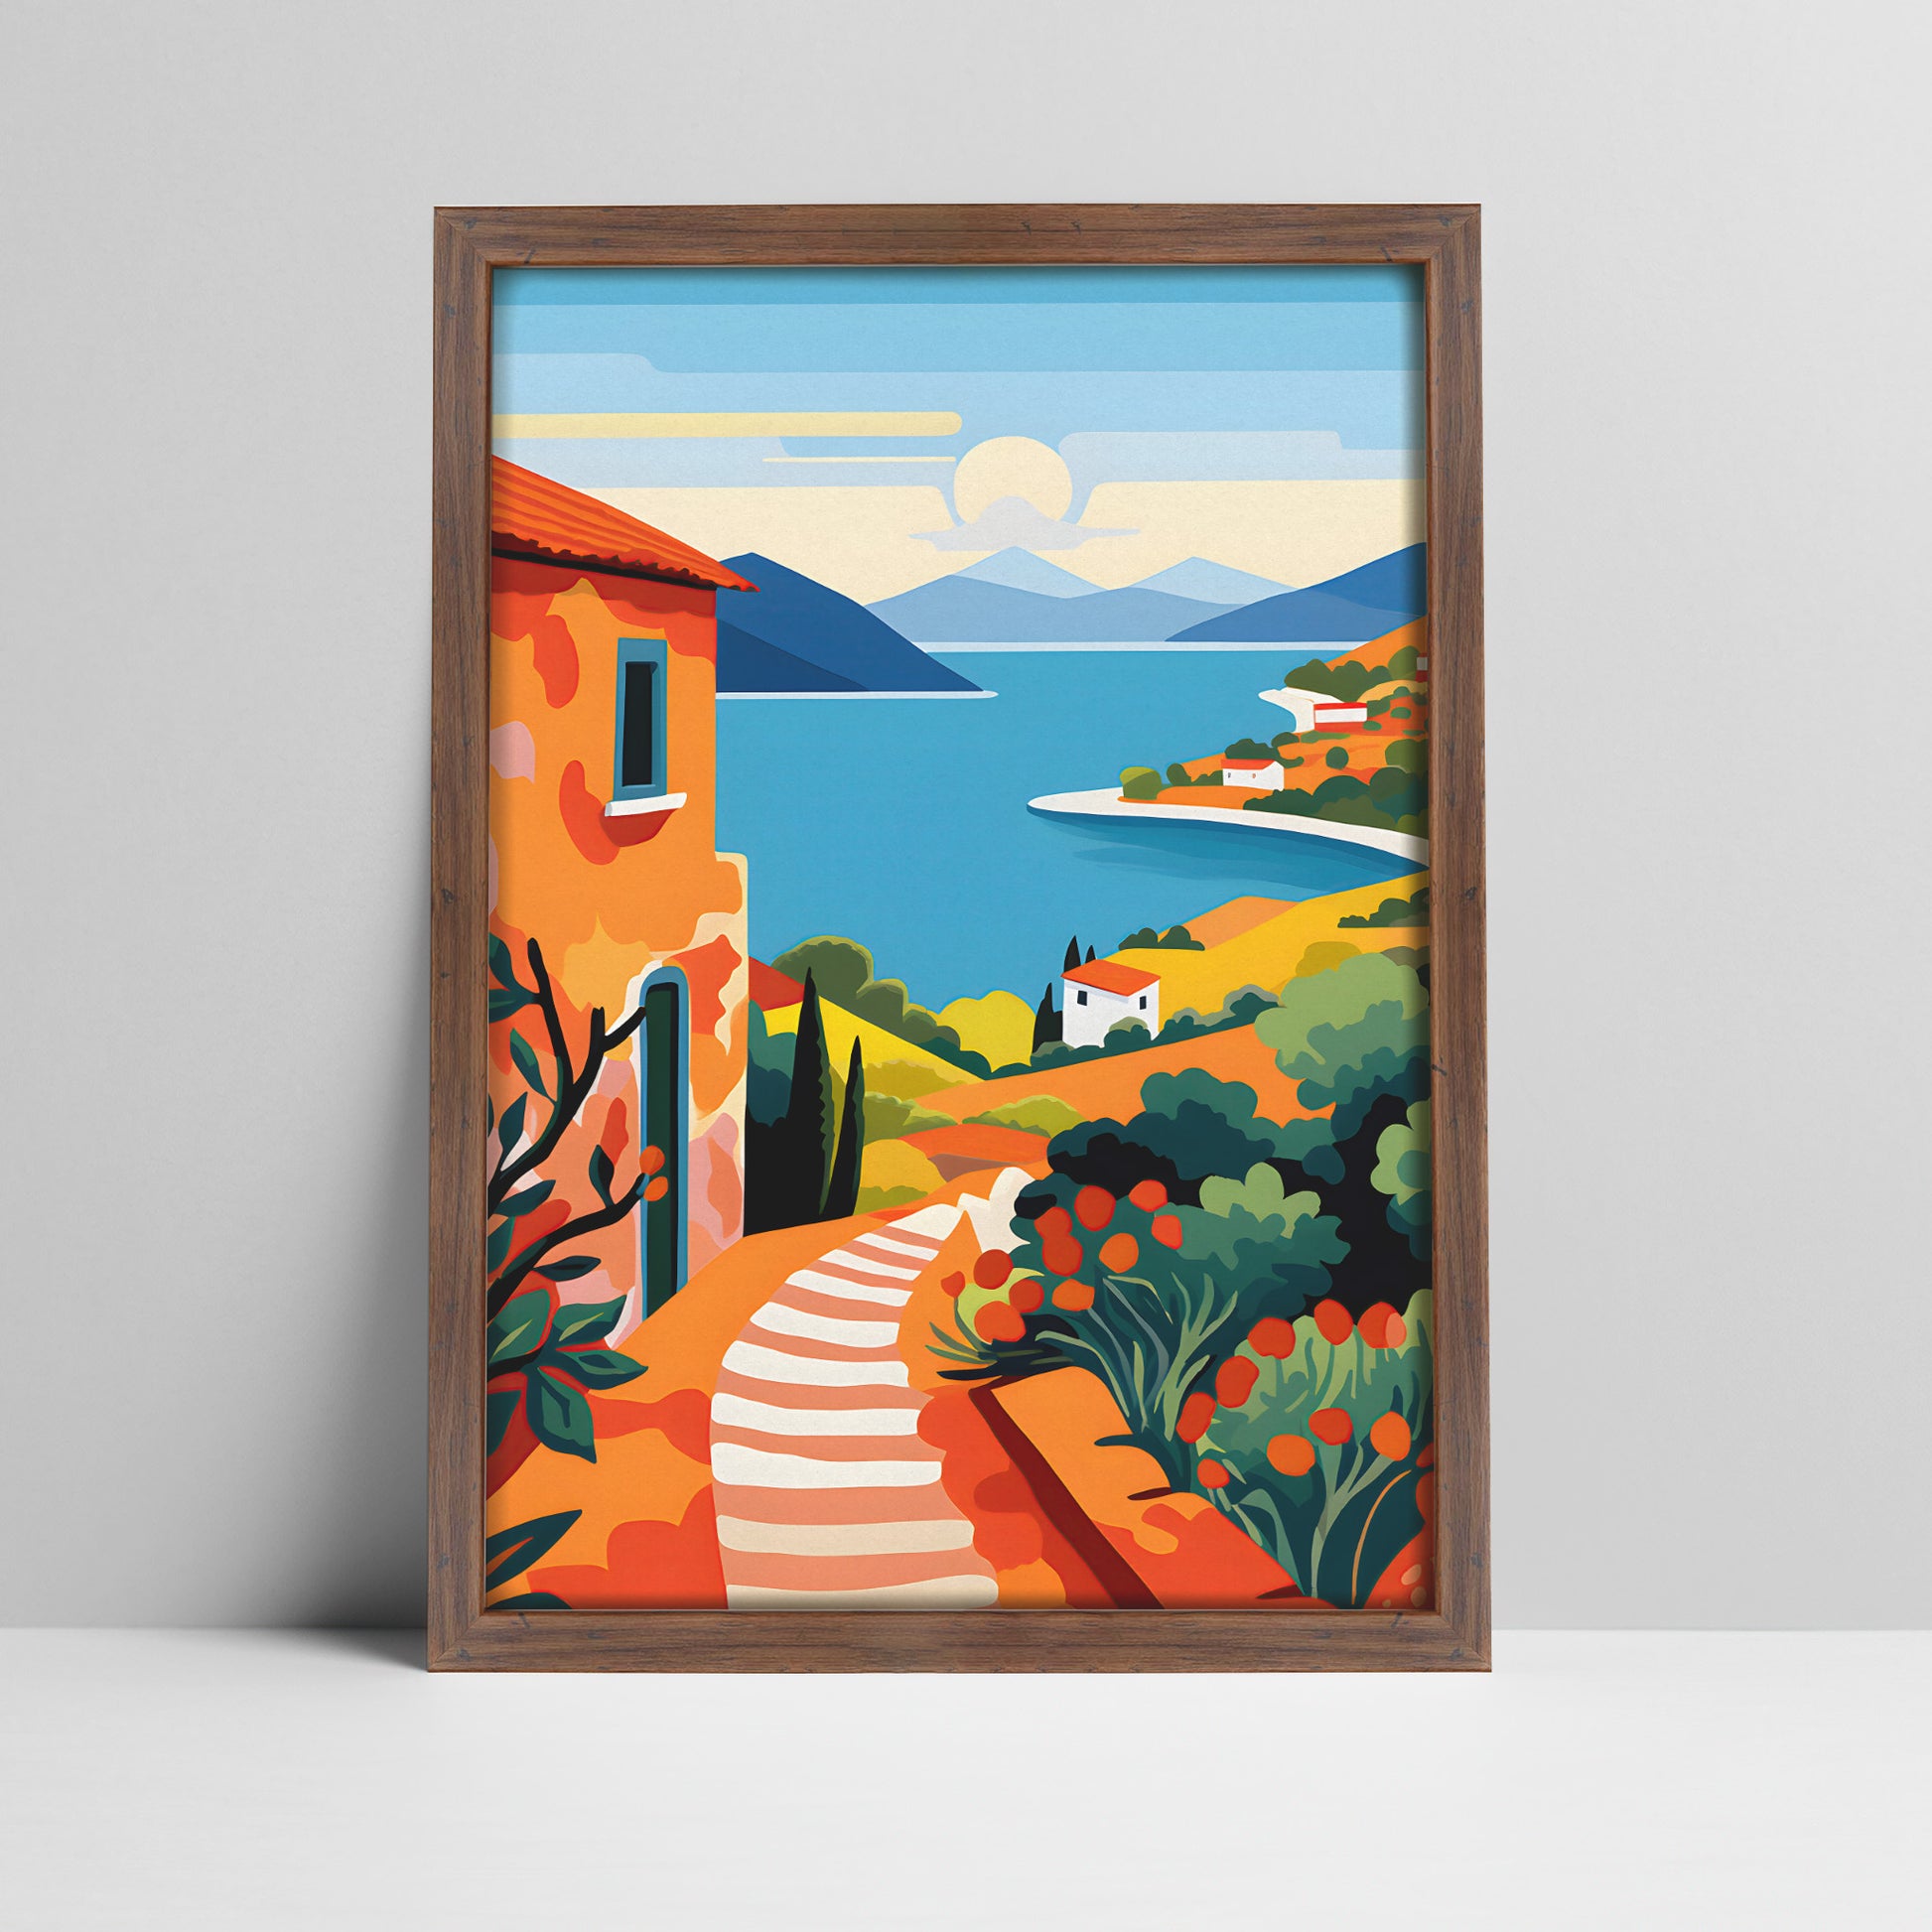 Art print of a mediterranean coastal village landscape illustration in a dark wood frame